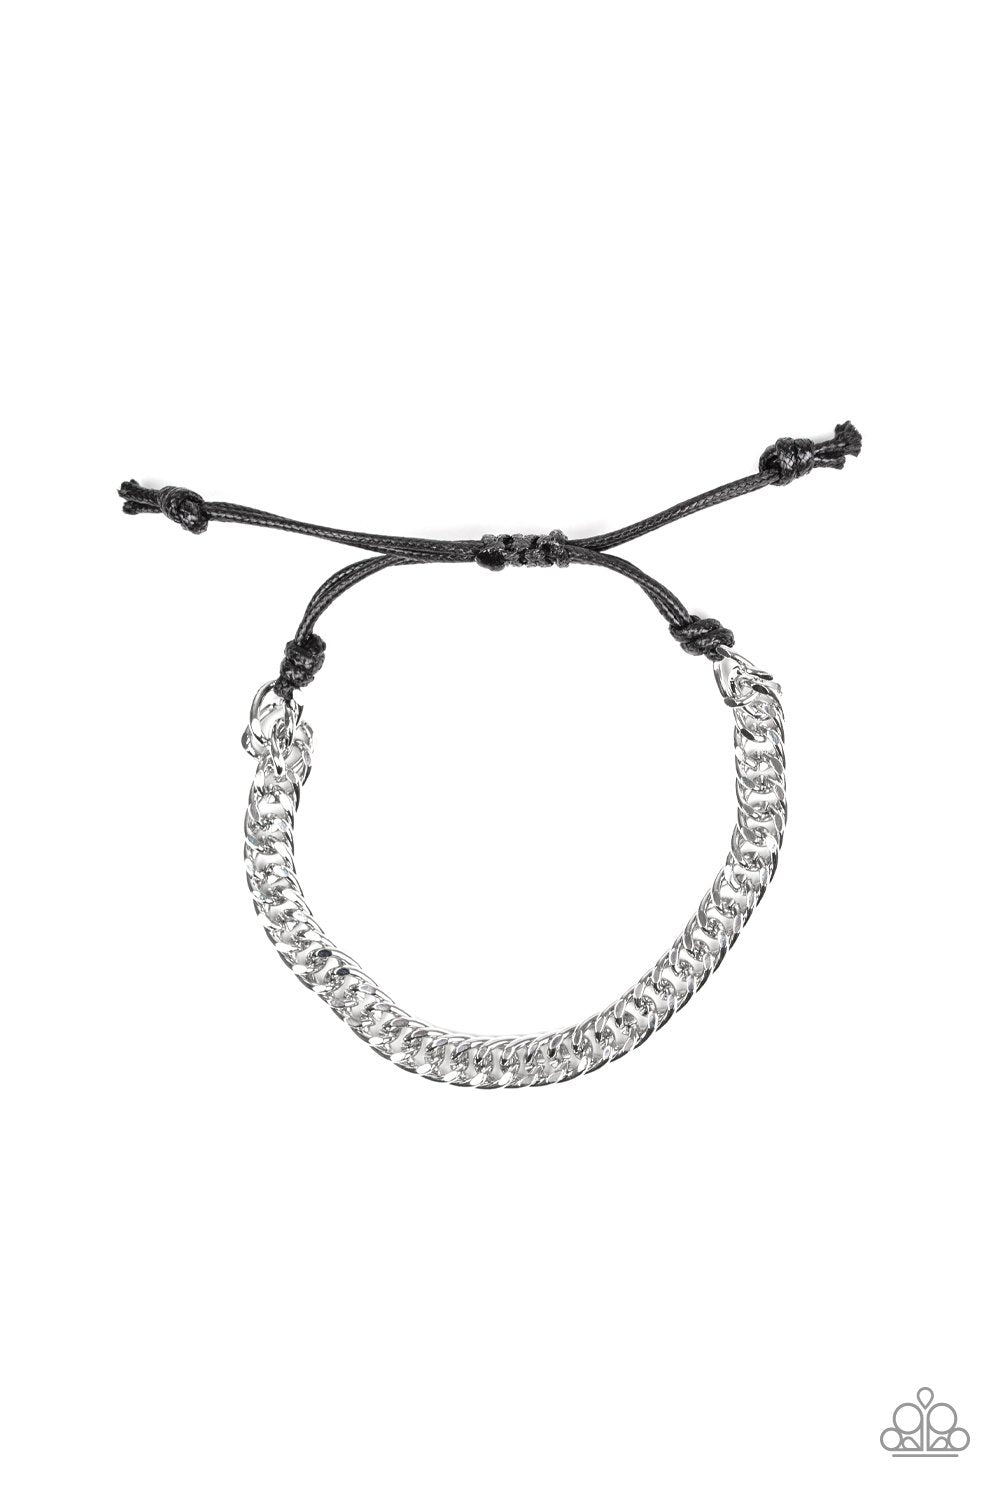 AWOL Men's Silver Chain Knot Bracelet - Paparazzi Accessories-CarasShop.com - $5 Jewelry by Cara Jewels